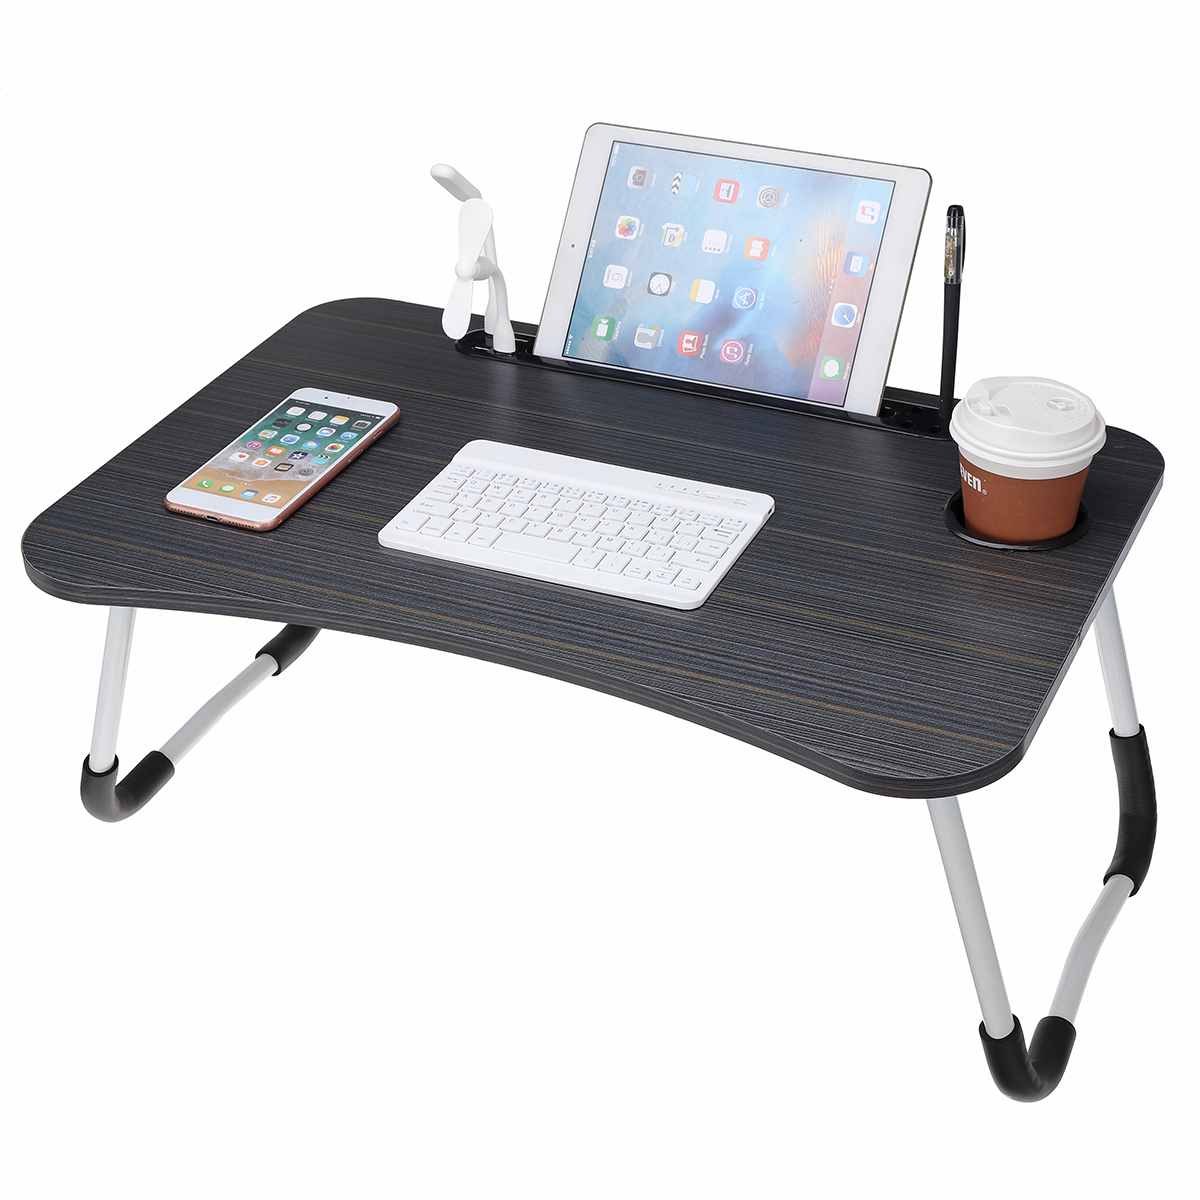 USB-Computer-Desk-Multifunctional-Portable-Bed-Computer-Desk-Lazy-Foldable-Lazy-Laptop-Table-for-Hom-1776388-17